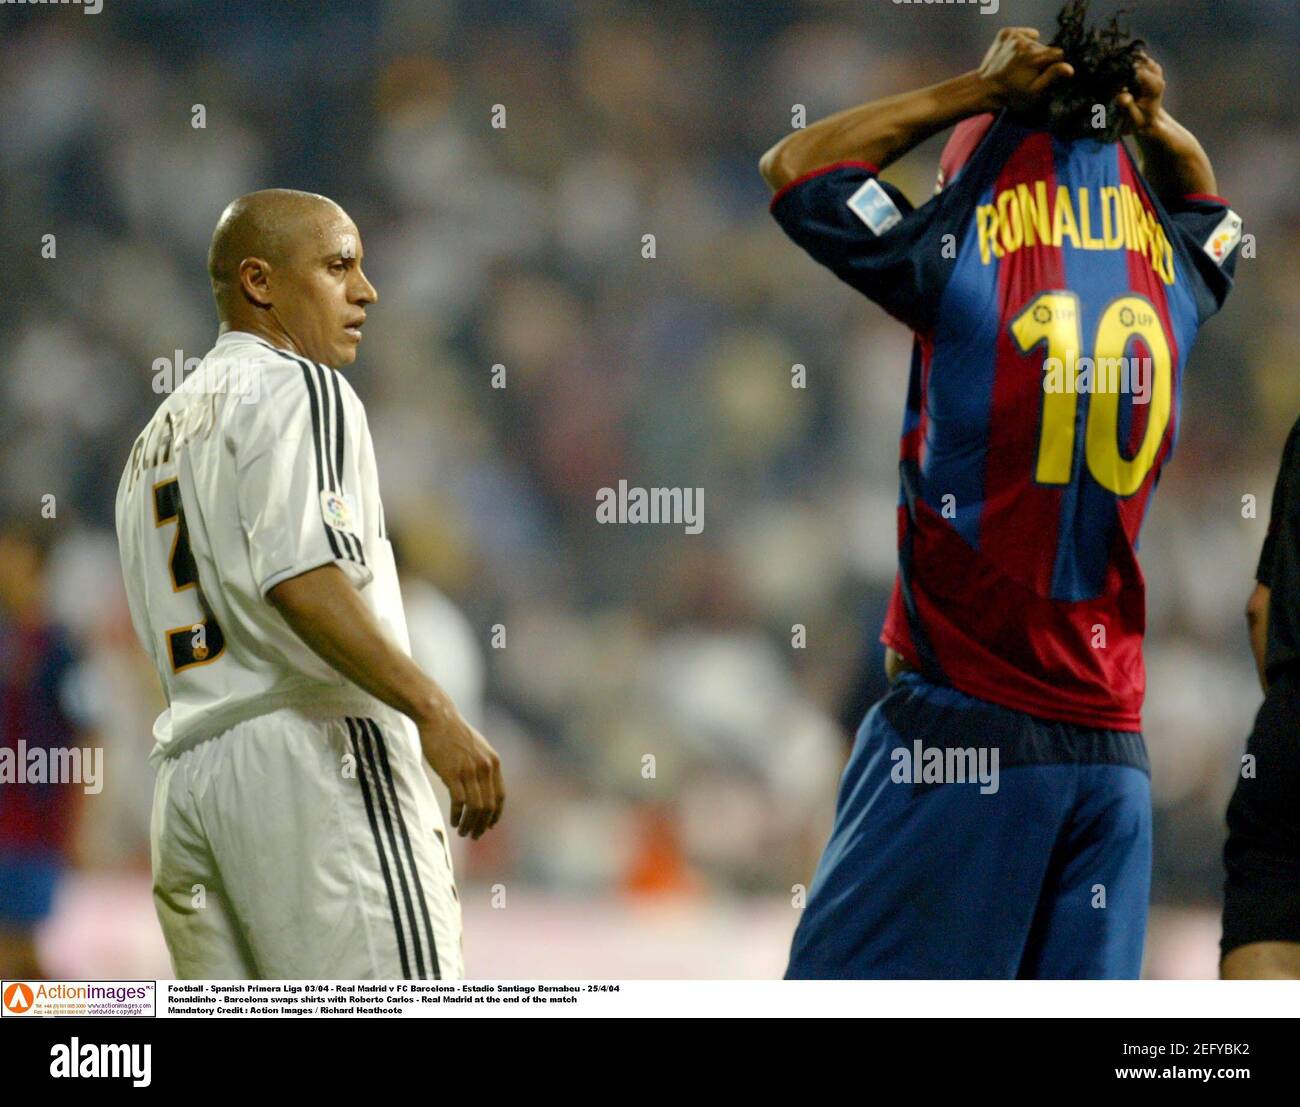 Football - Spanish Primera Liga 03/04 - Real Madrid v FC Barcelona -  Estadio Santiago Bernabeu - 25/4/04 Ronaldinho - Barcelona swaps shirts  with Roberto Carlos - Real Madrid at the end